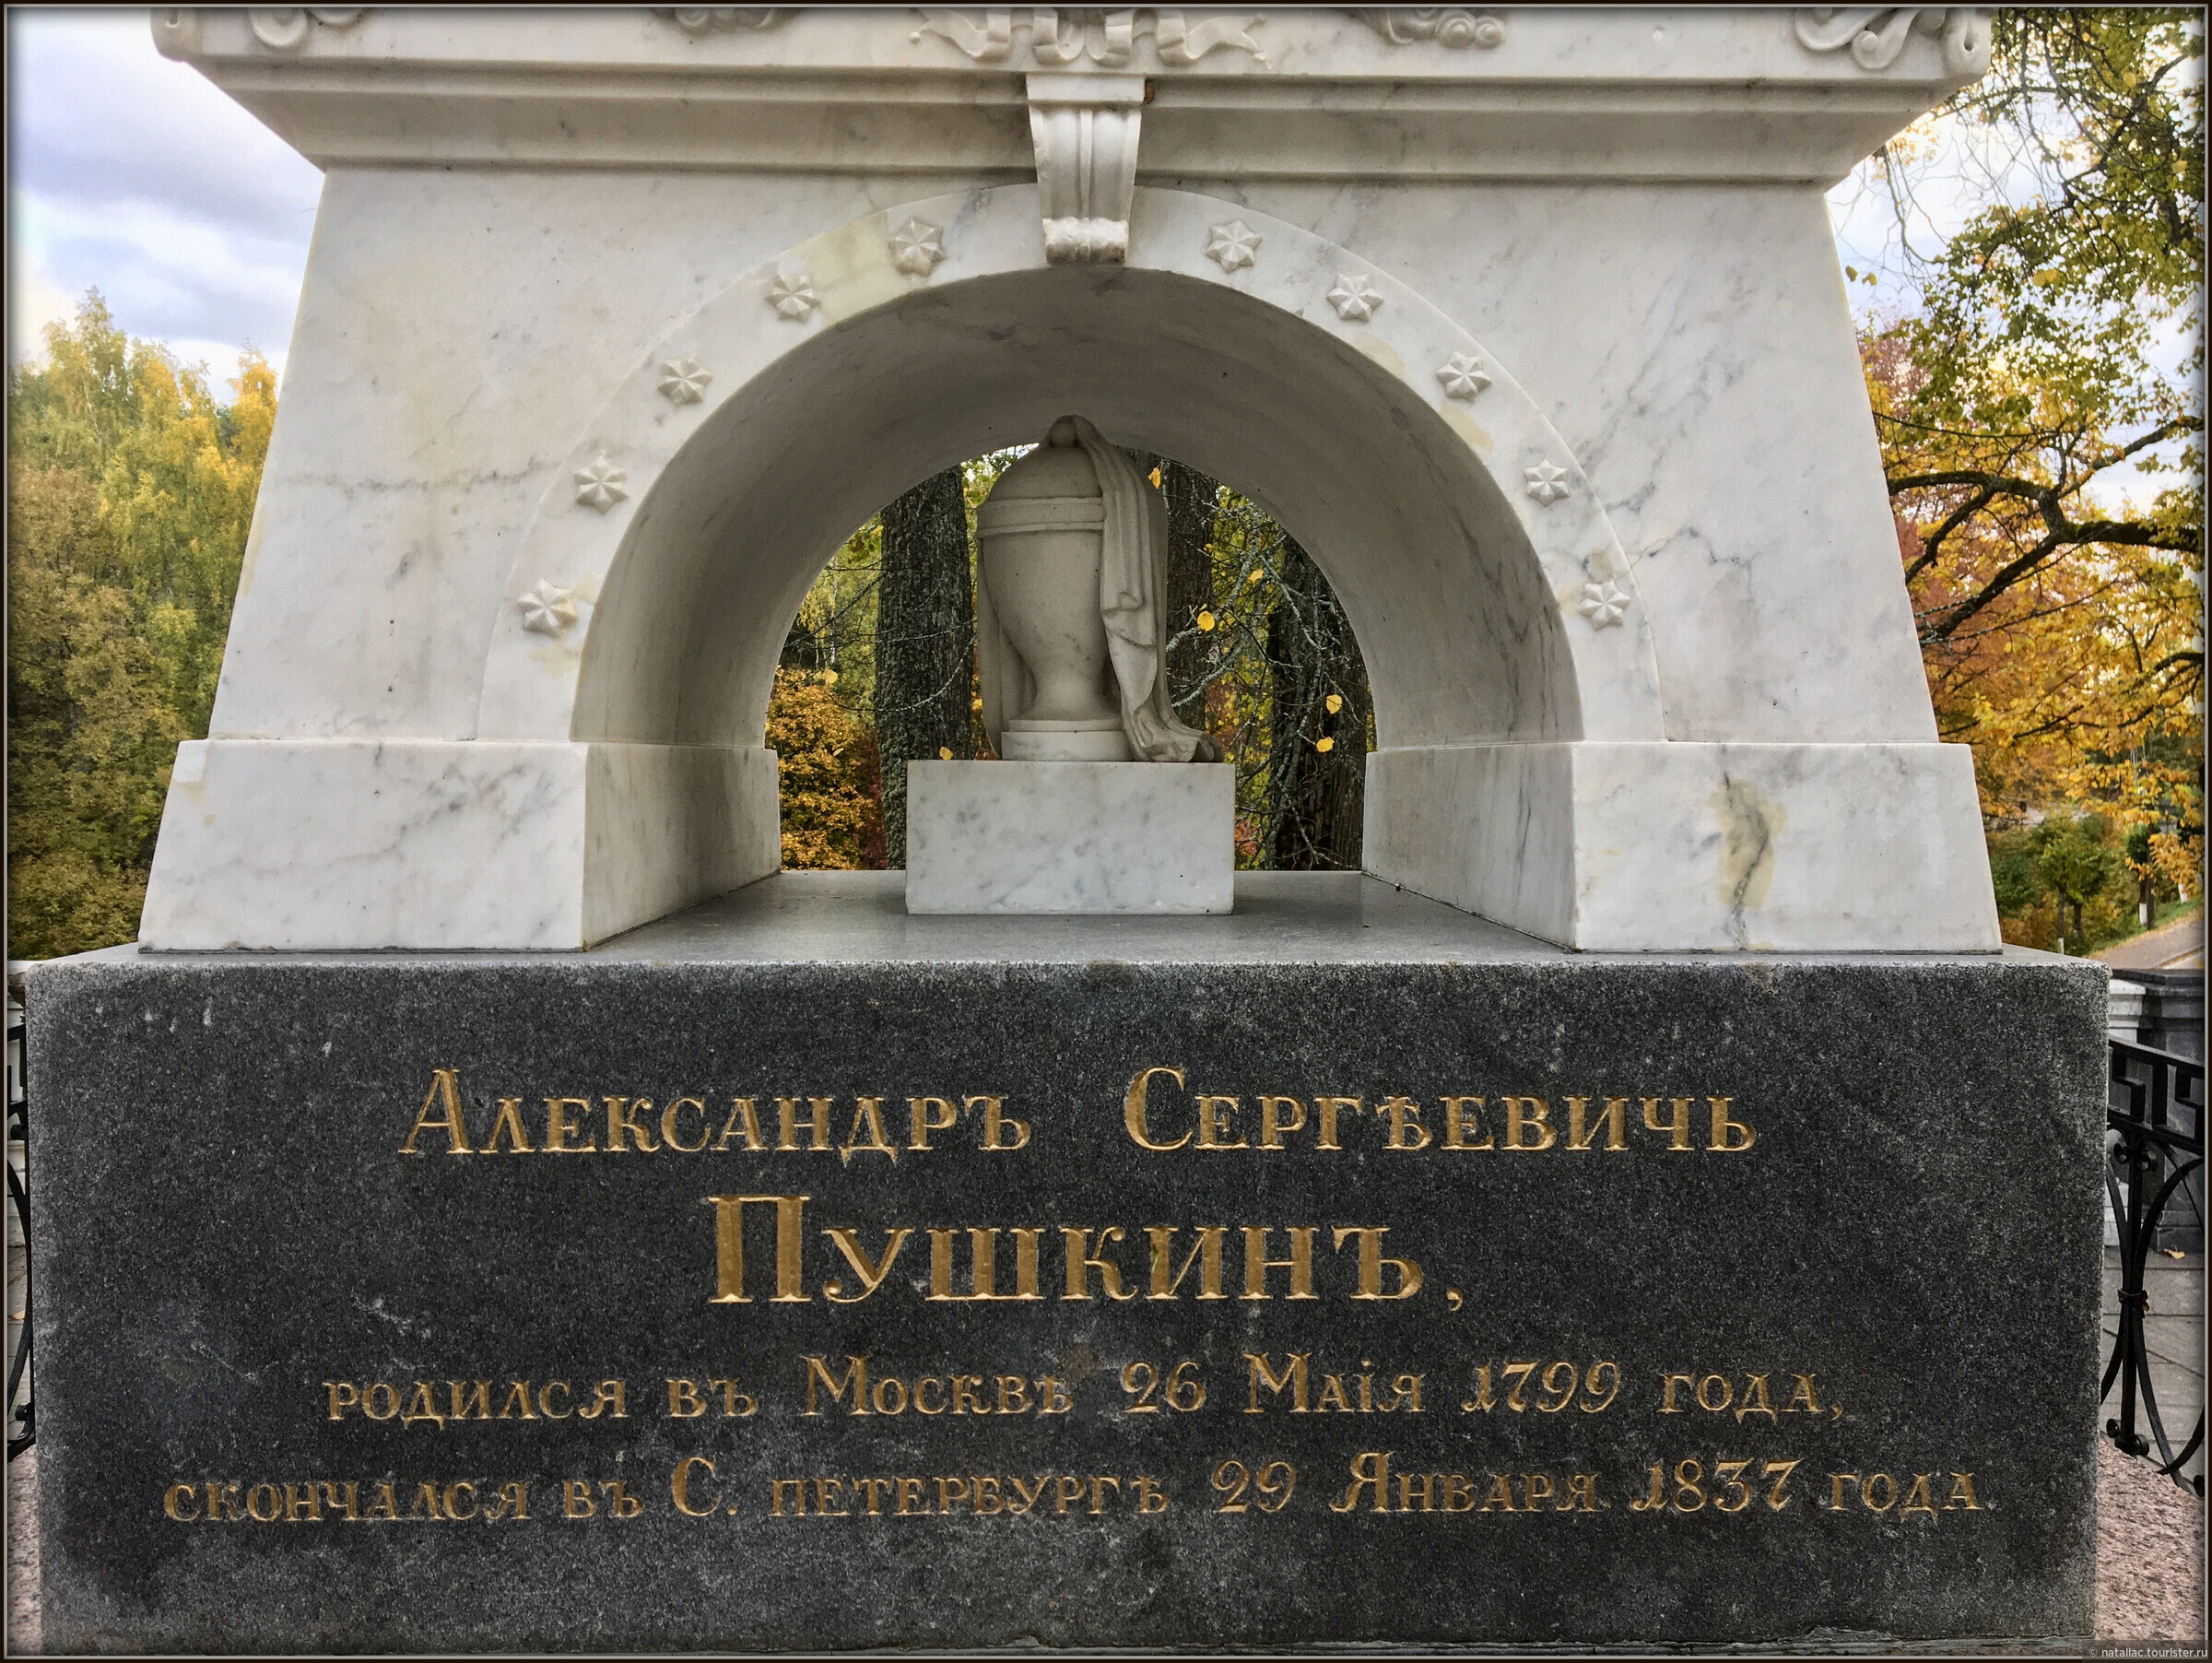 Монастырь могила пушкина